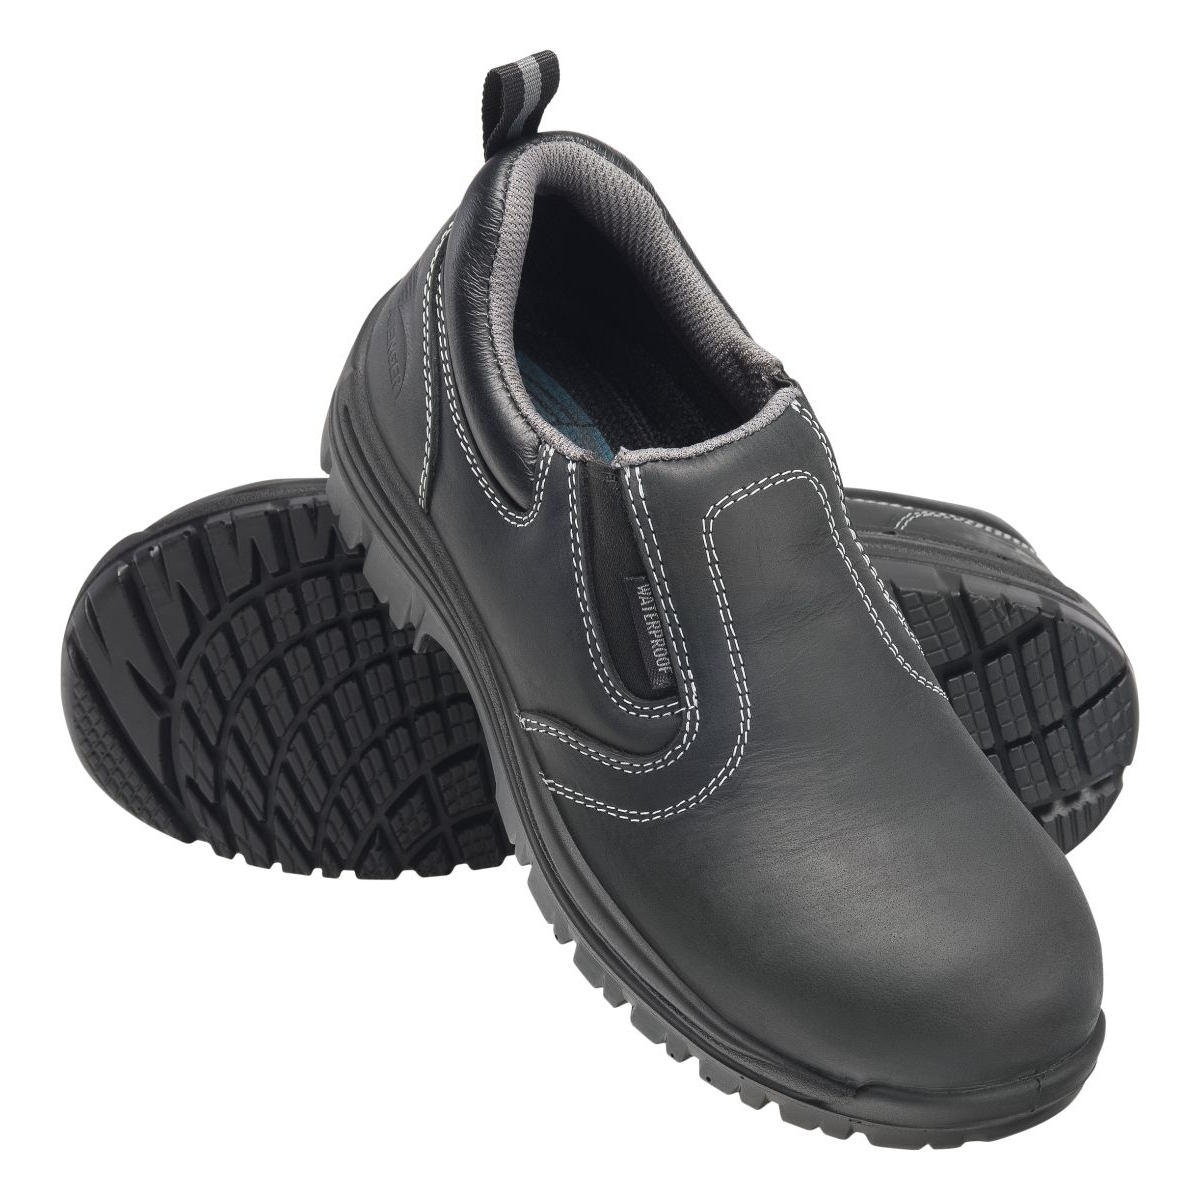 FSI FOOTWEAR SPECIALTIES INTERNATIONAL NAUTILUS Avenger Women's Foreman Slip-On Composite Toe PR Work Shoes Black - A7169 - BLACK, 7.5-M